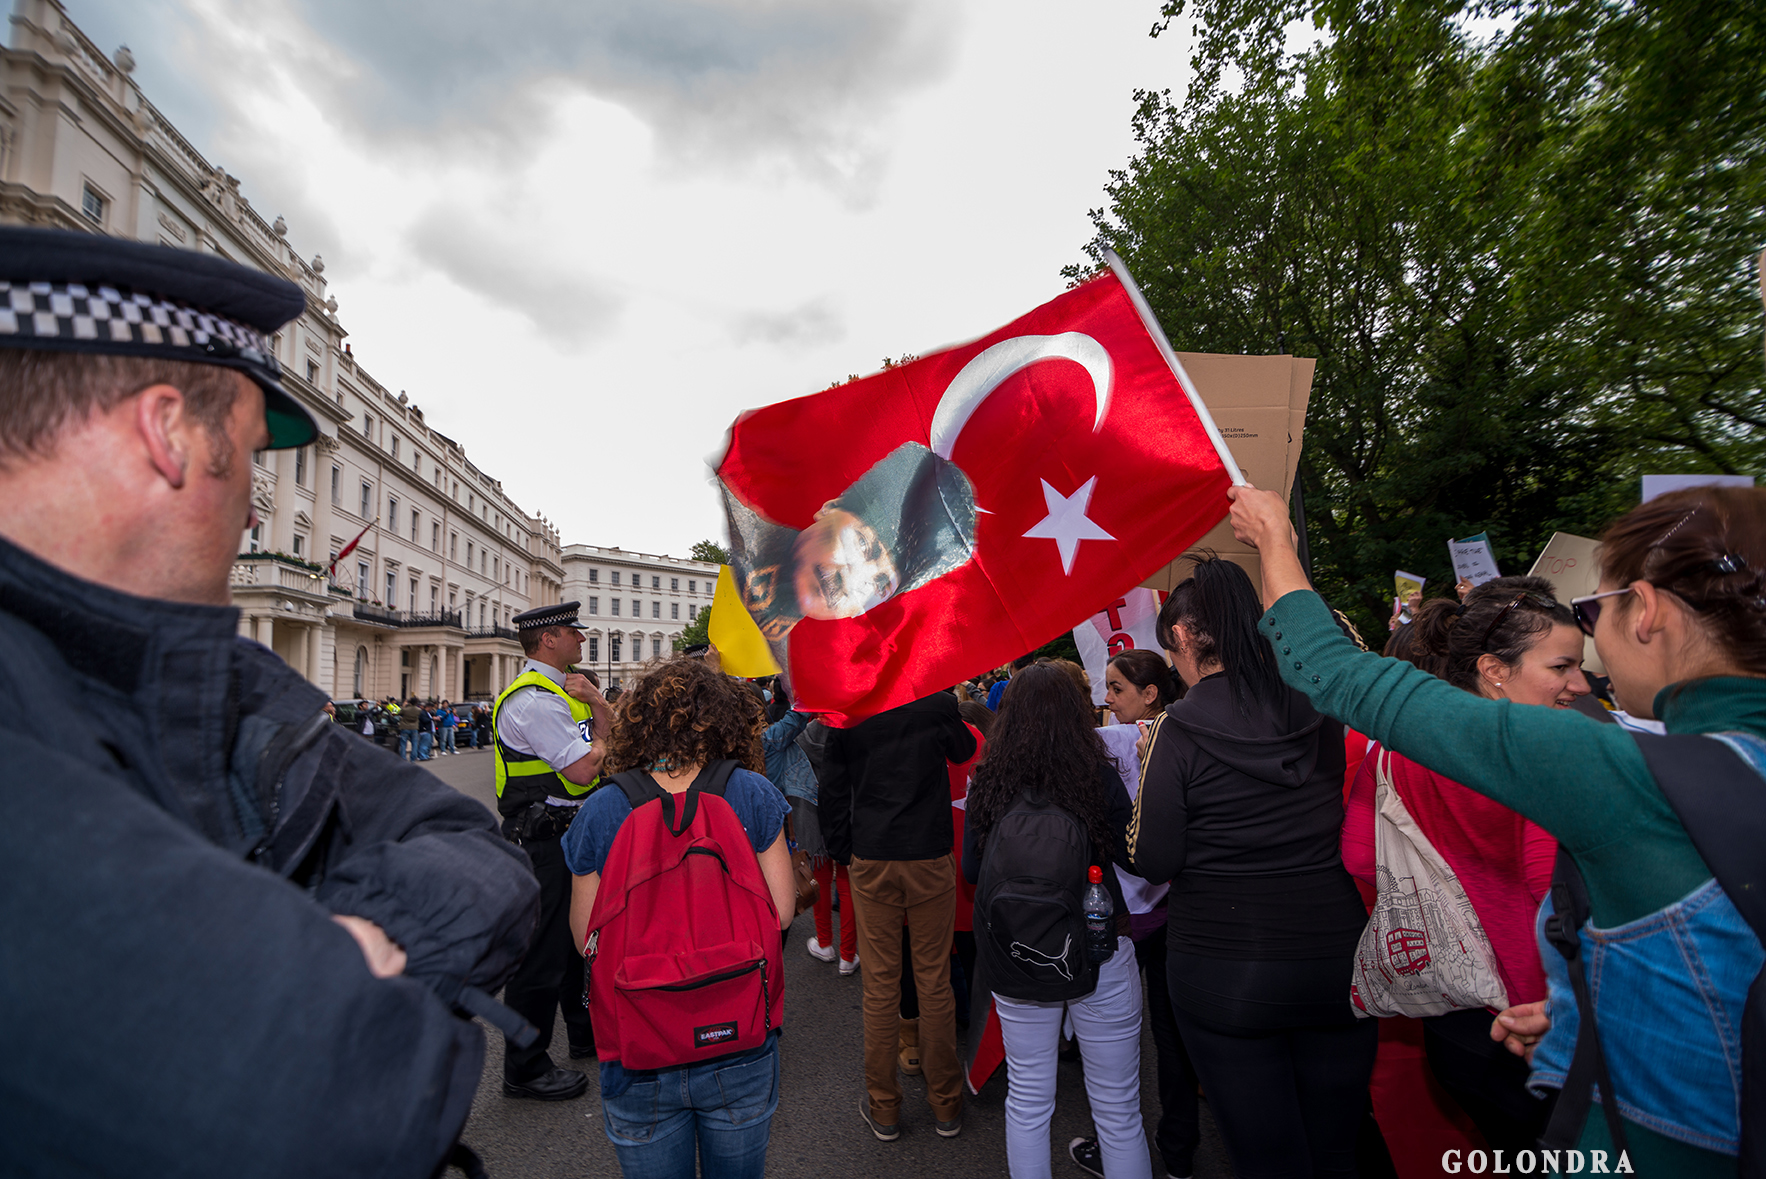 Protesting Turkish Government - Turk Hukumetini Protesto - Londra - London (41)